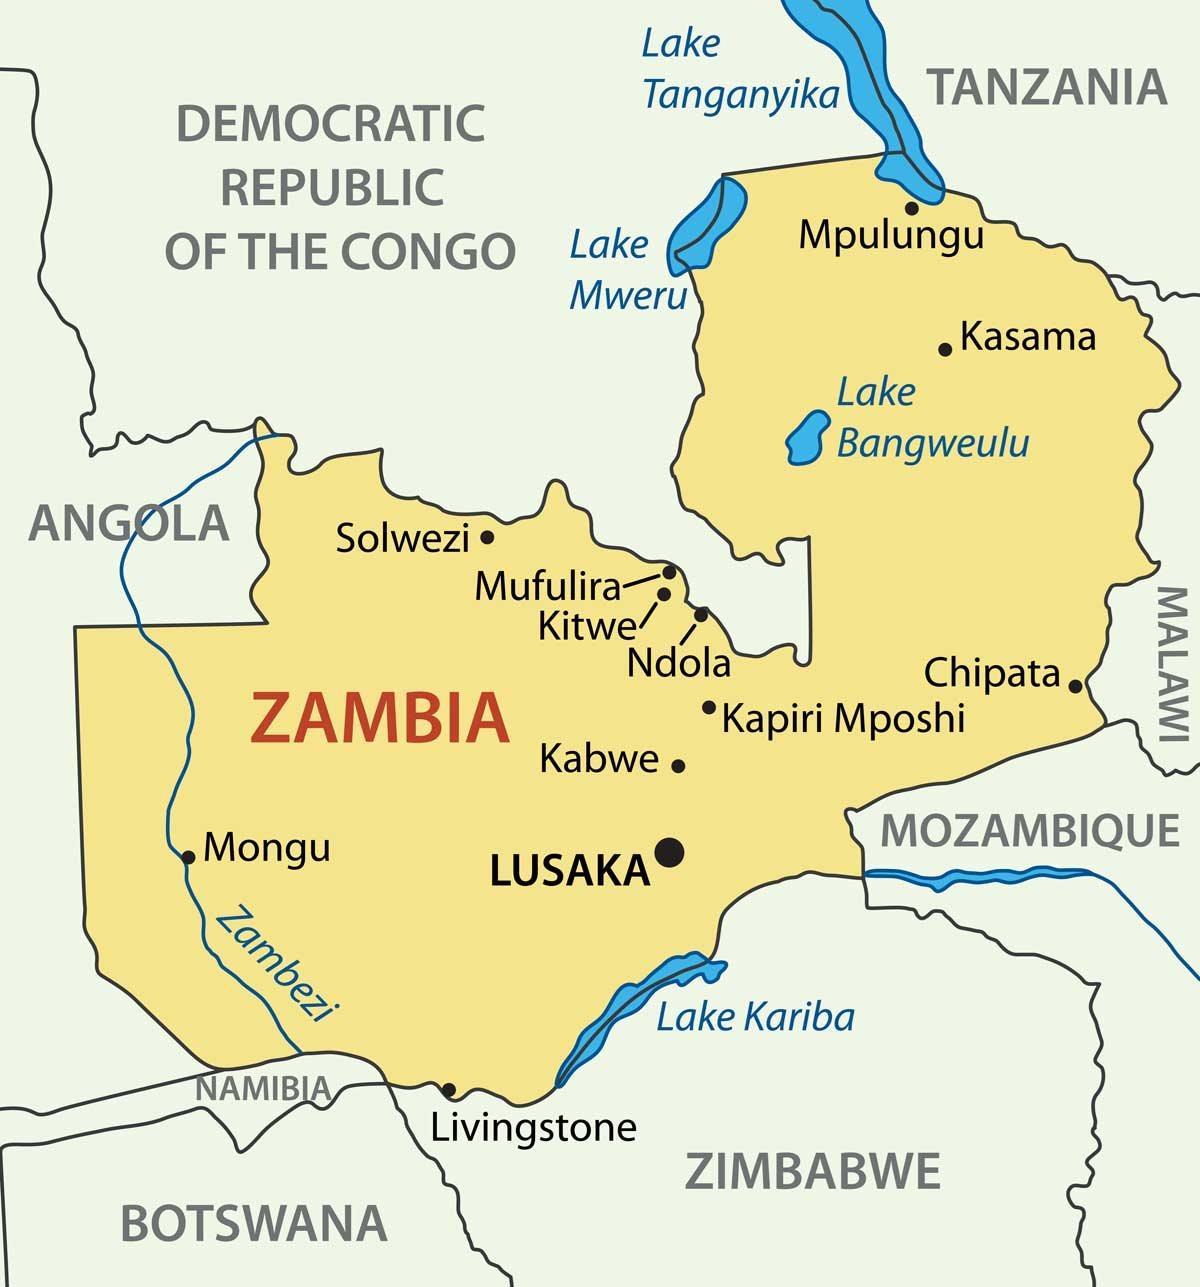 Mapa de kitwe Zambia